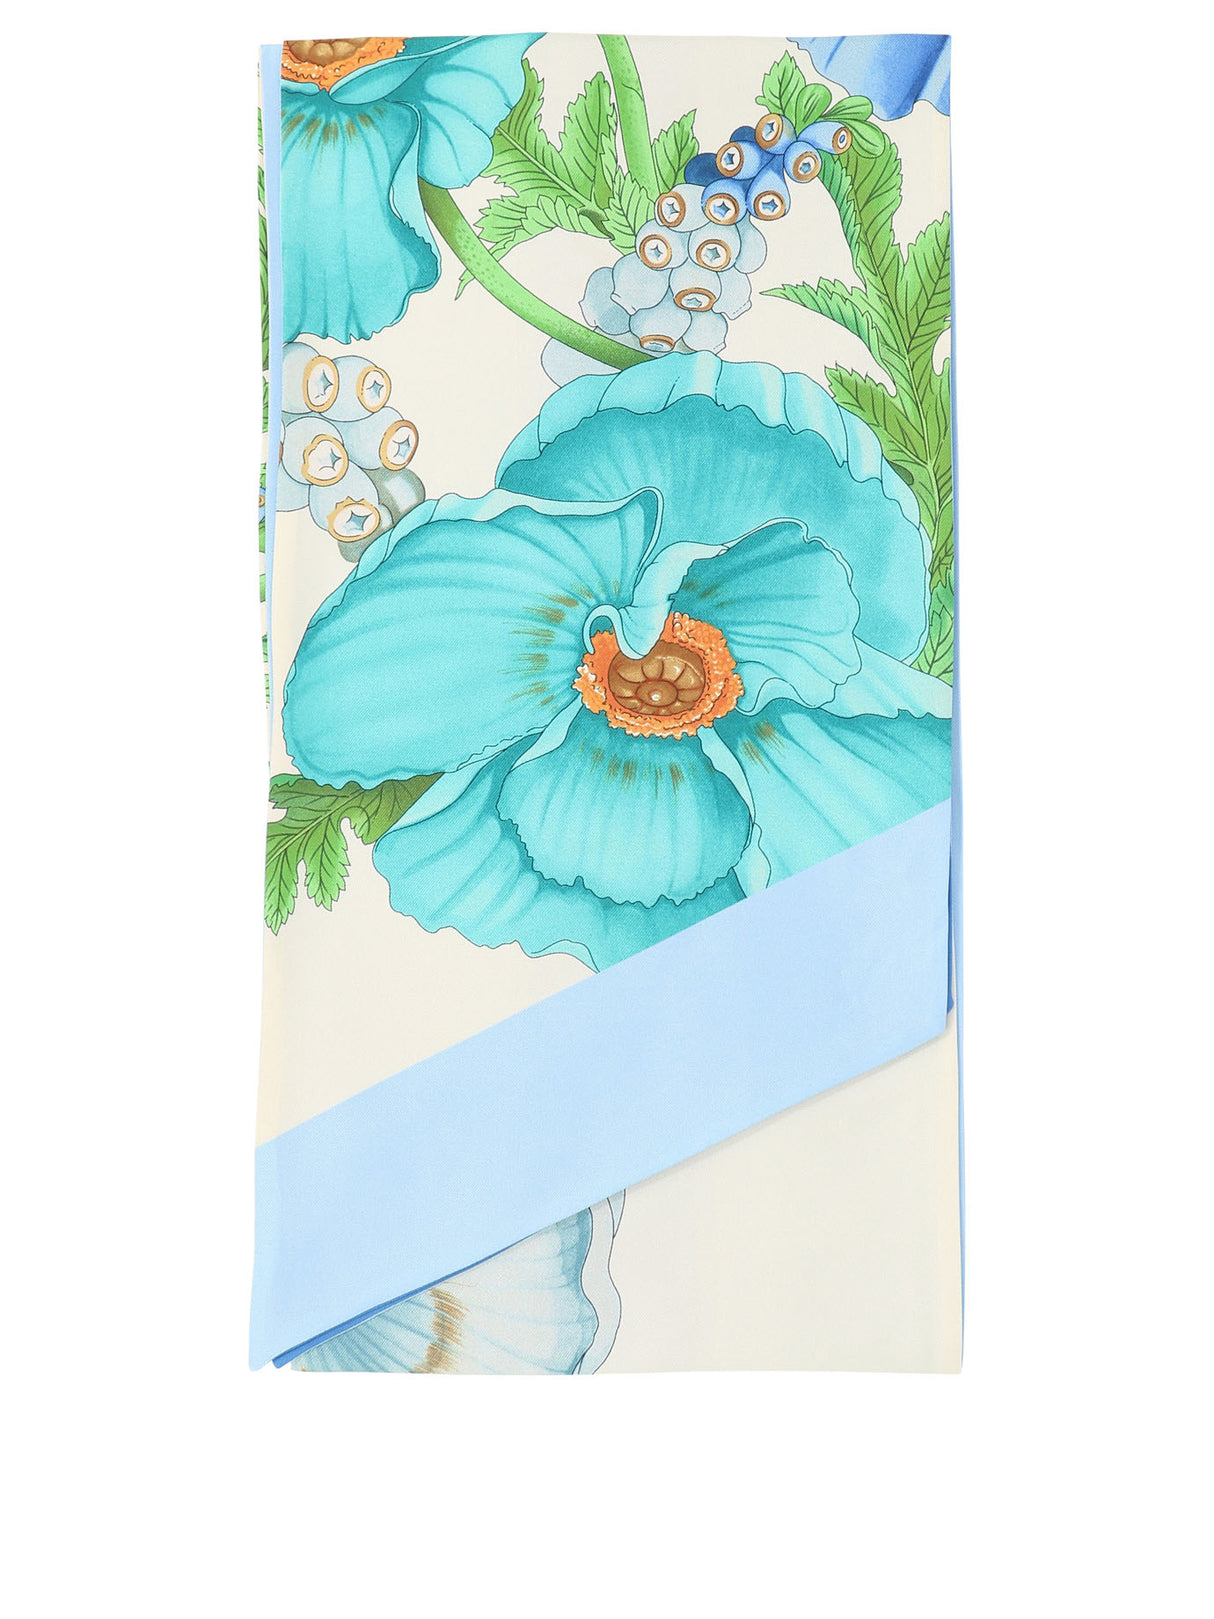 FERRAGAMO Light Blue Silk Scarf with Poppy Print